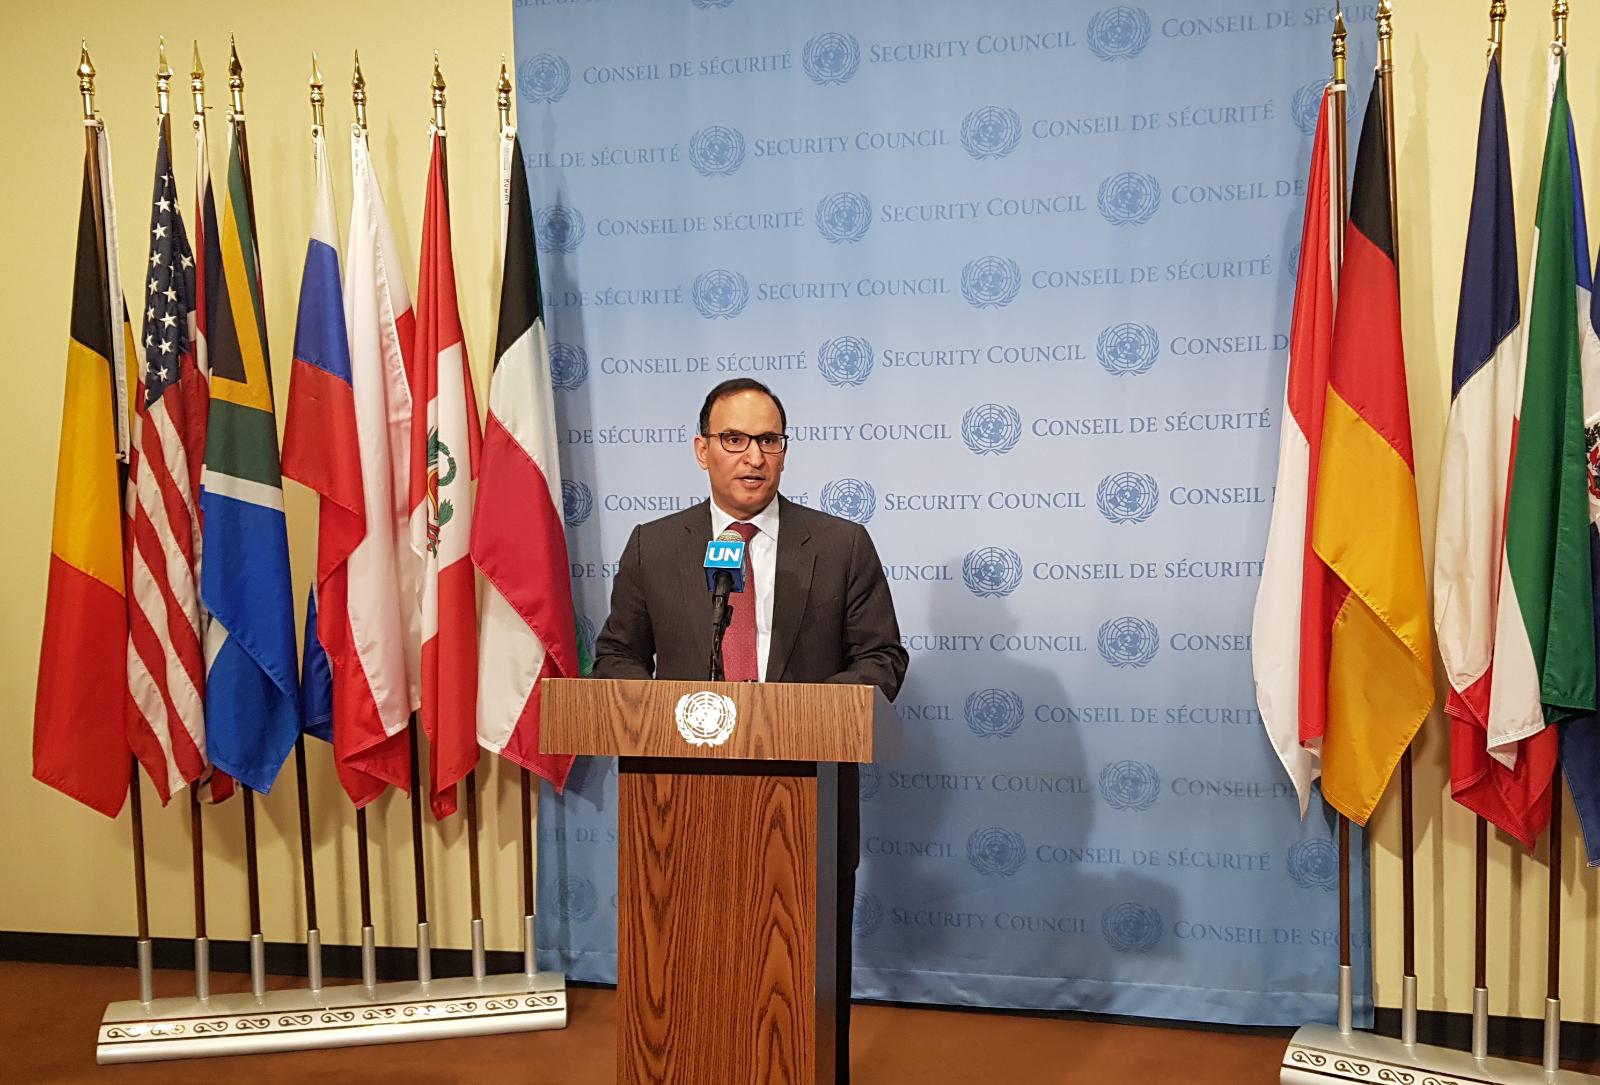 Kuwait's permanent UN representative Mansour Al-Otaibi